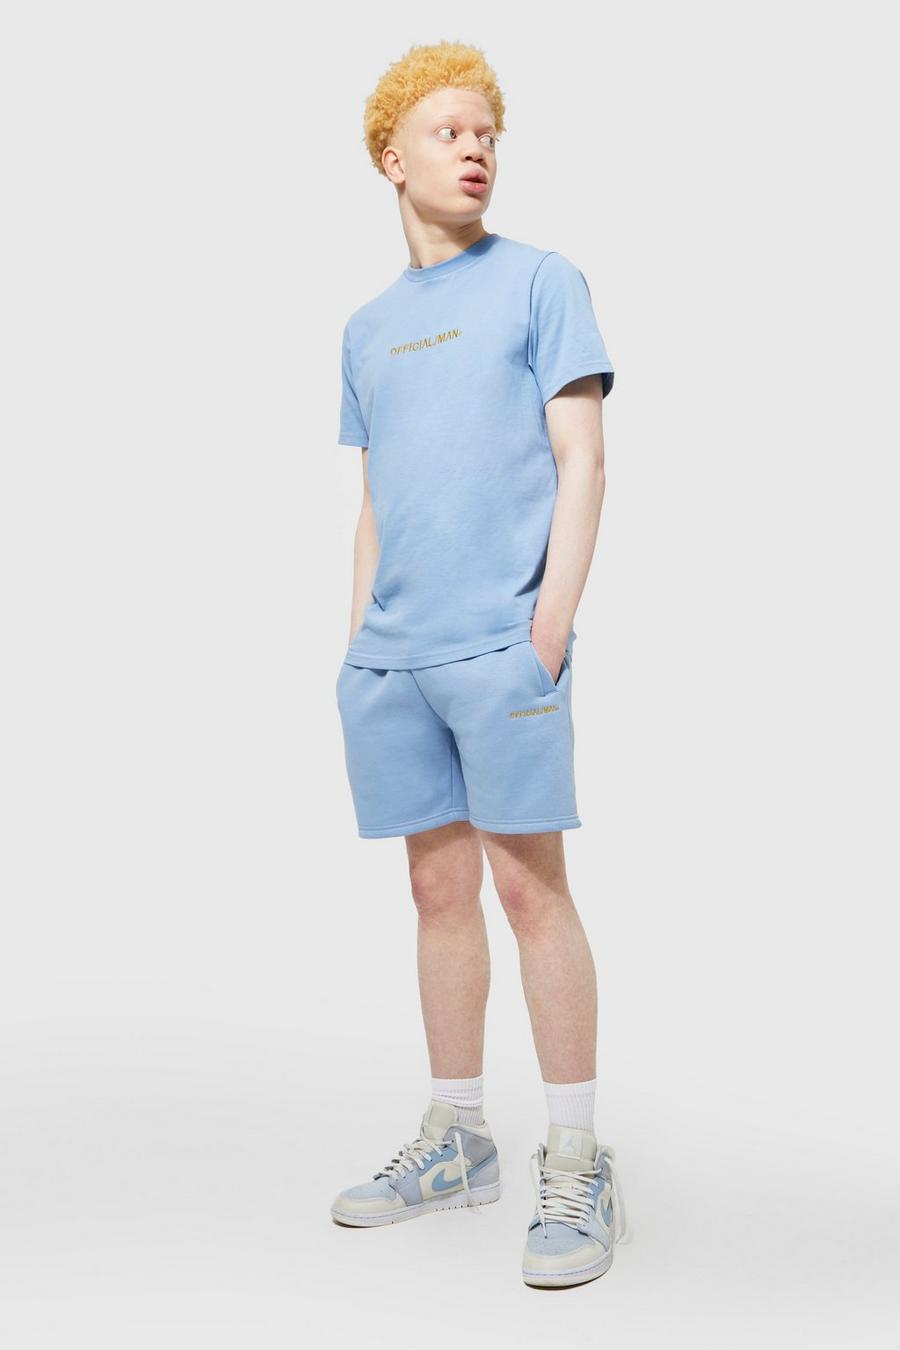 Light blue Slim Fit Official Man T-shirt And Short Set